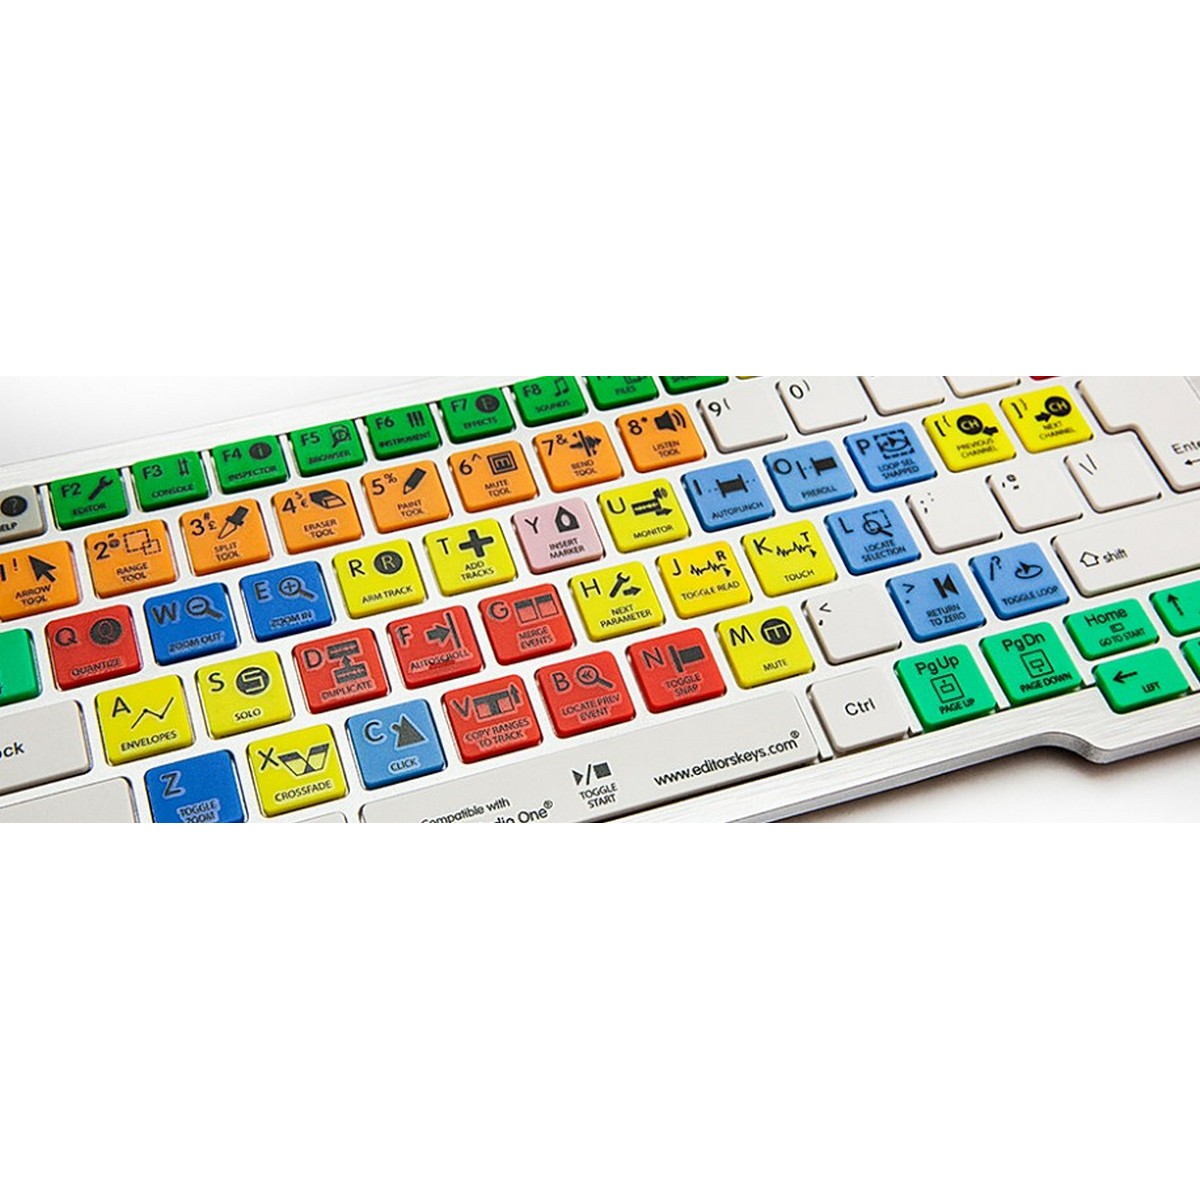 Editors Keys Dedicated Keyboard for Presonus Studio One | PC Shortcut Keyboard